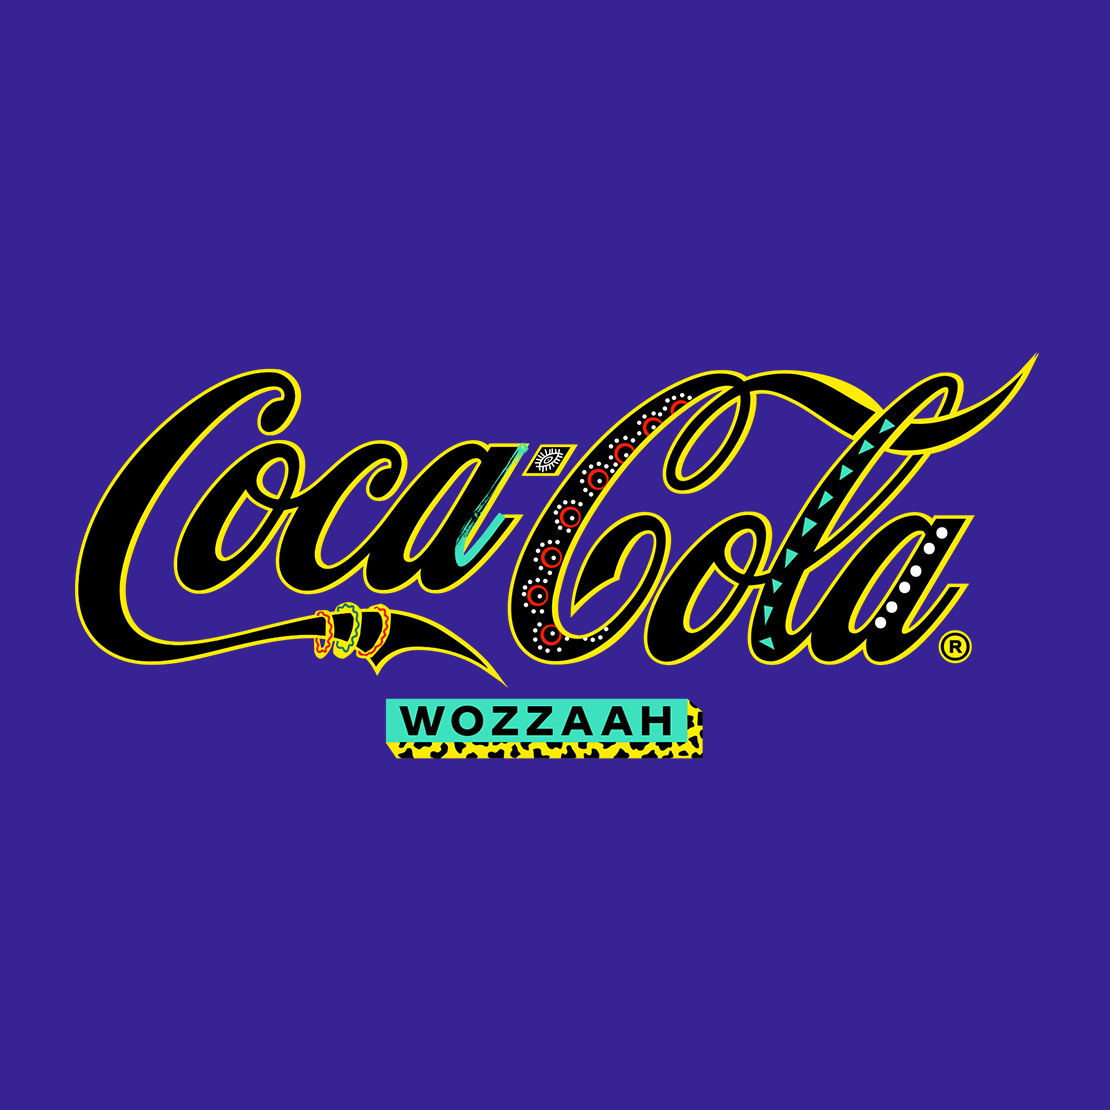 Coca-Cola Wozzaah